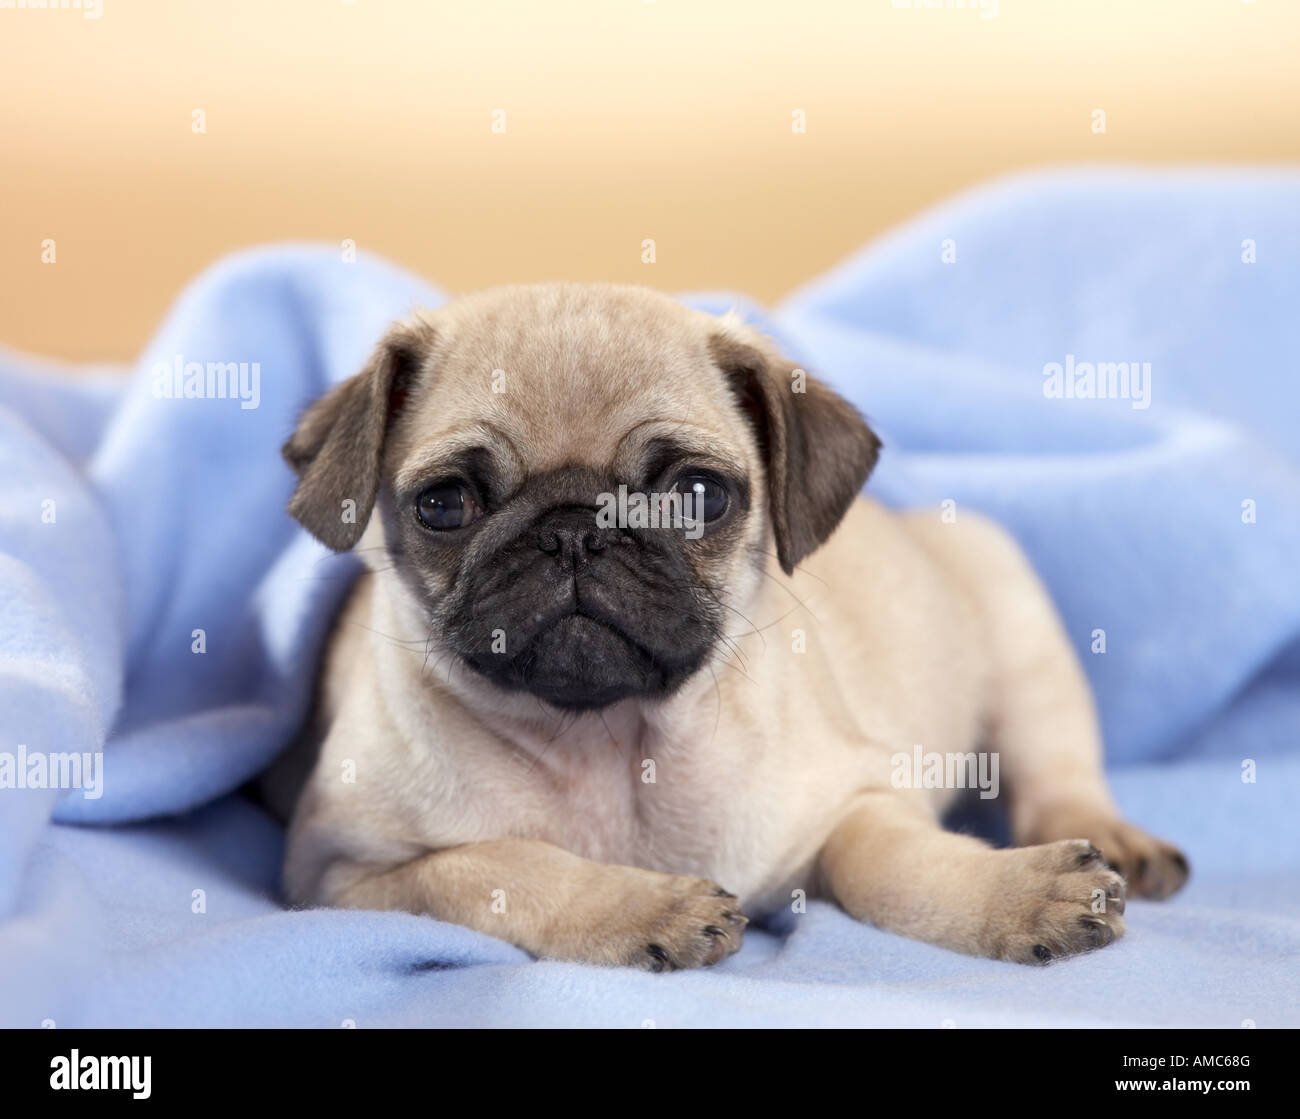 Pug. Puppy lying on a blue blanket Stock Photo - Alamy